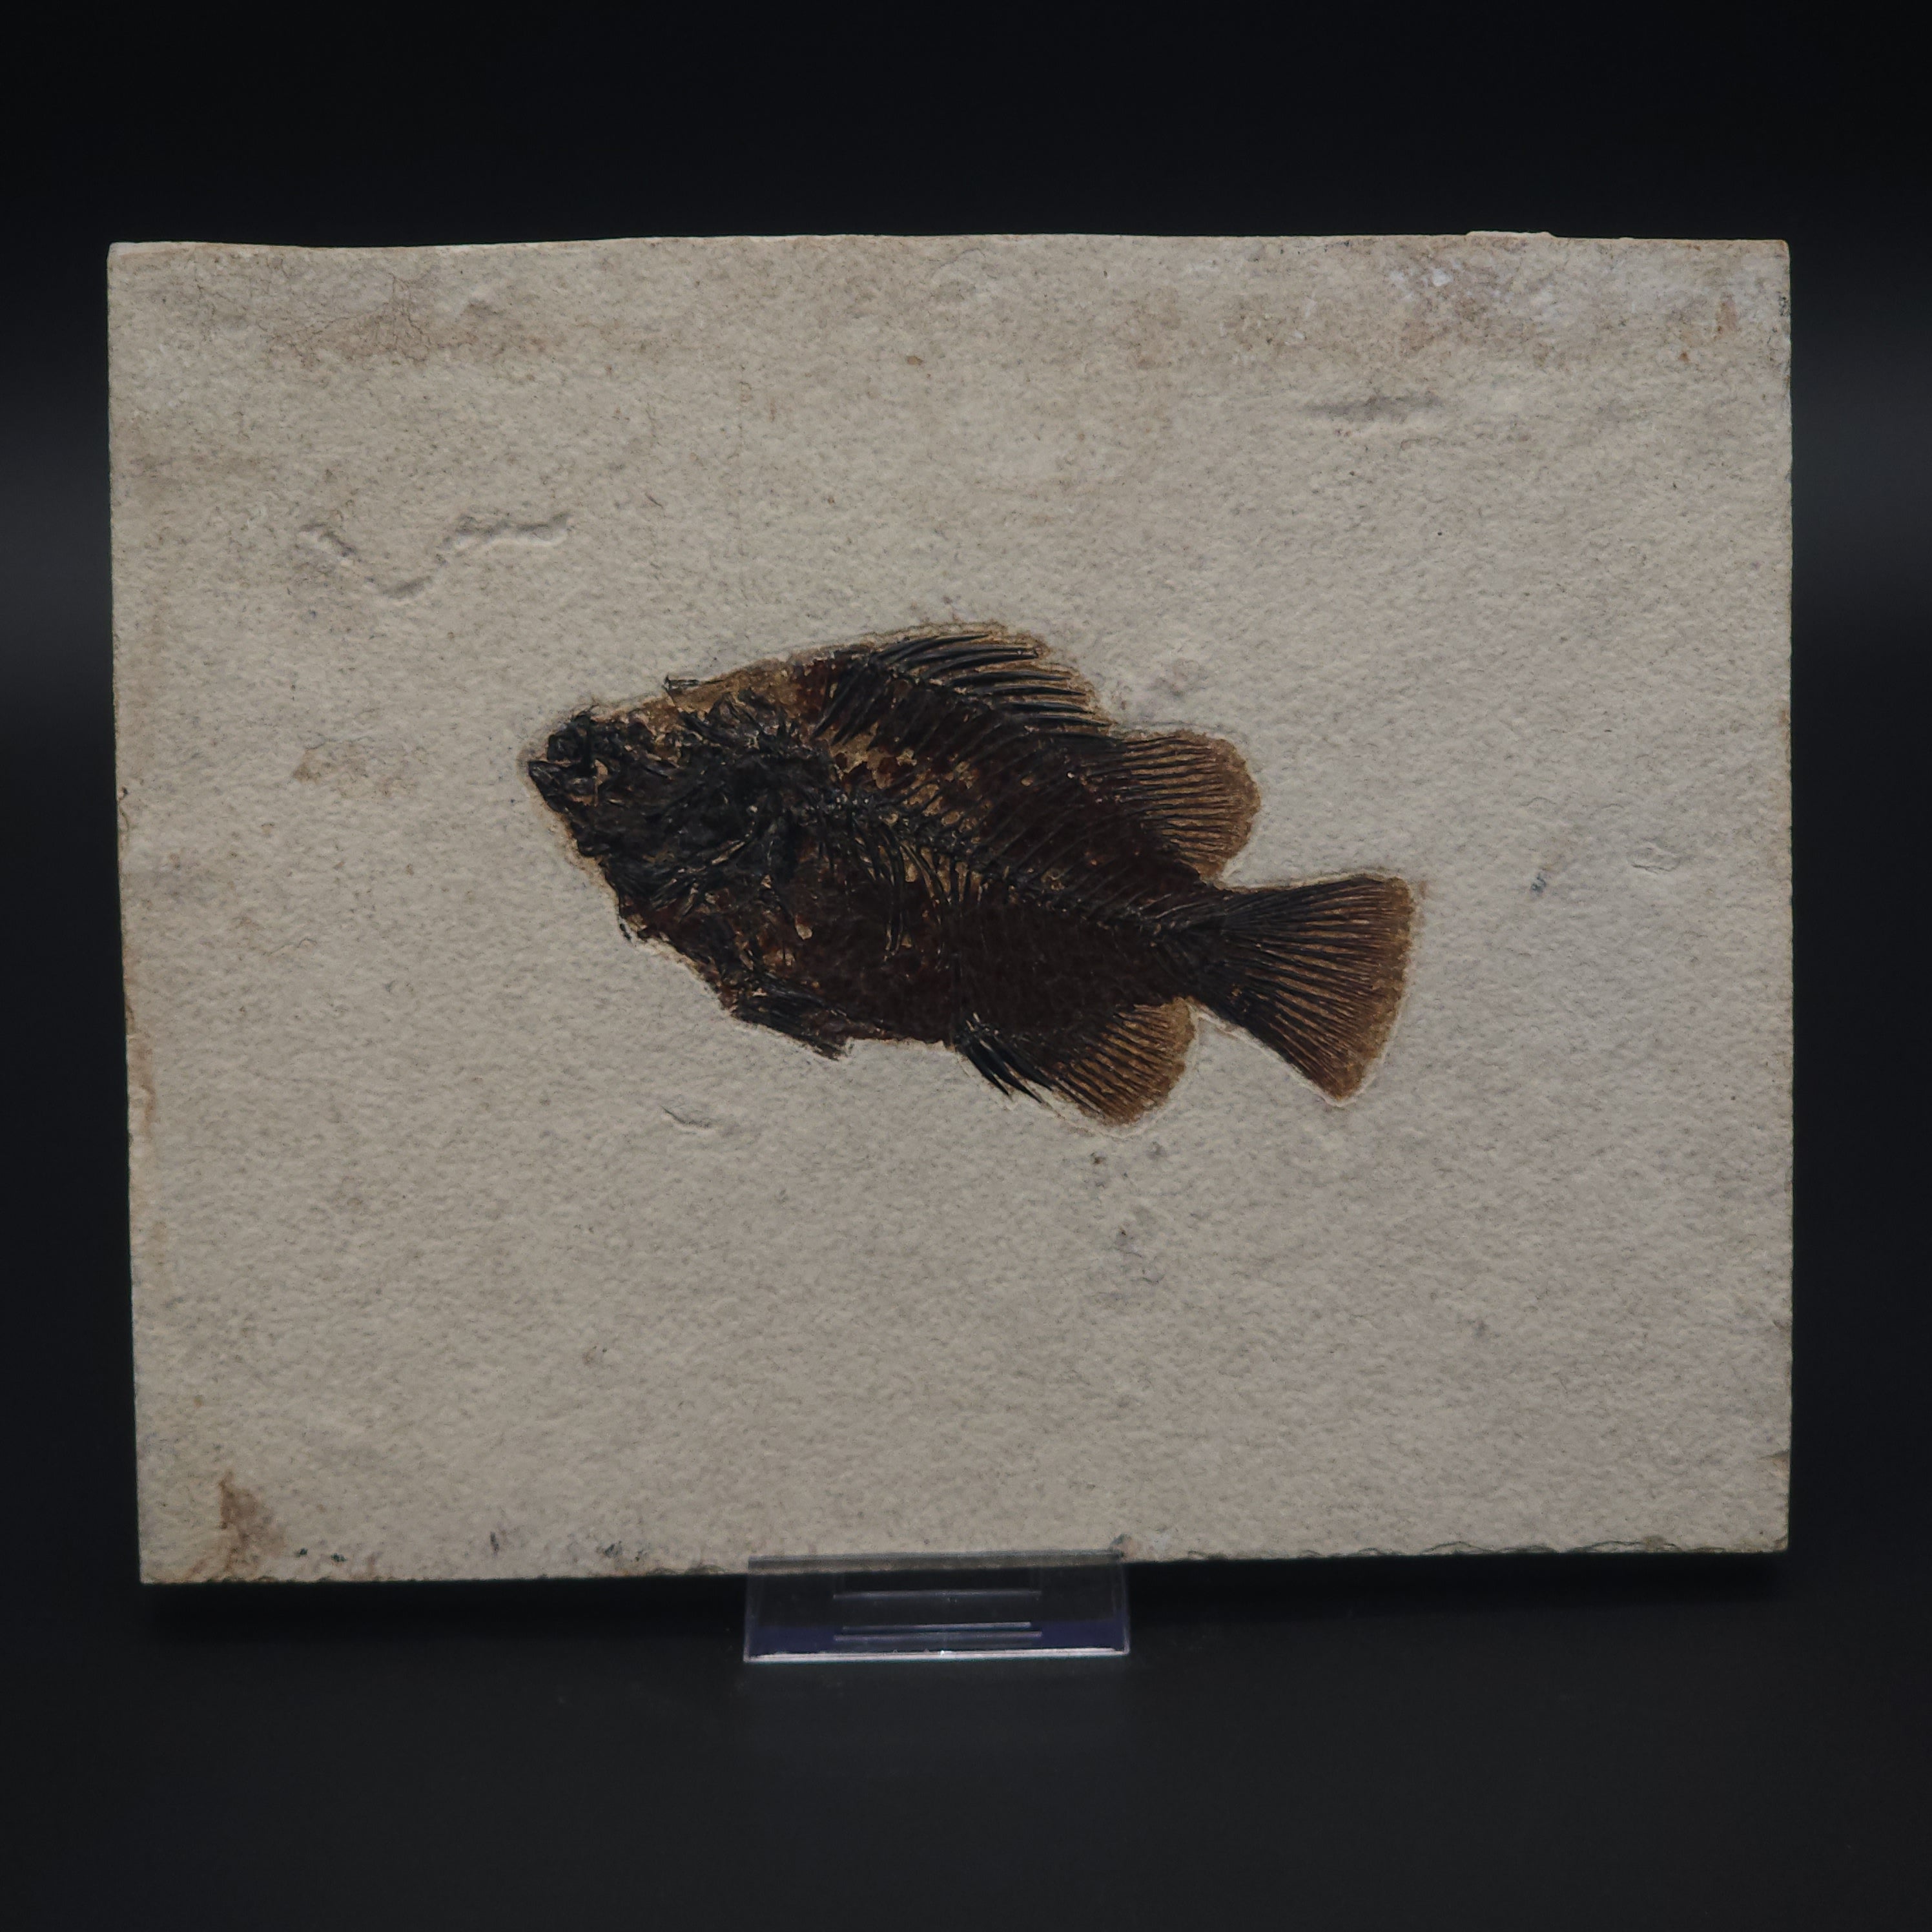 Green River Formation fossil fish Priscacara serrata species centered on limestone matrix. The fish measures 5.5